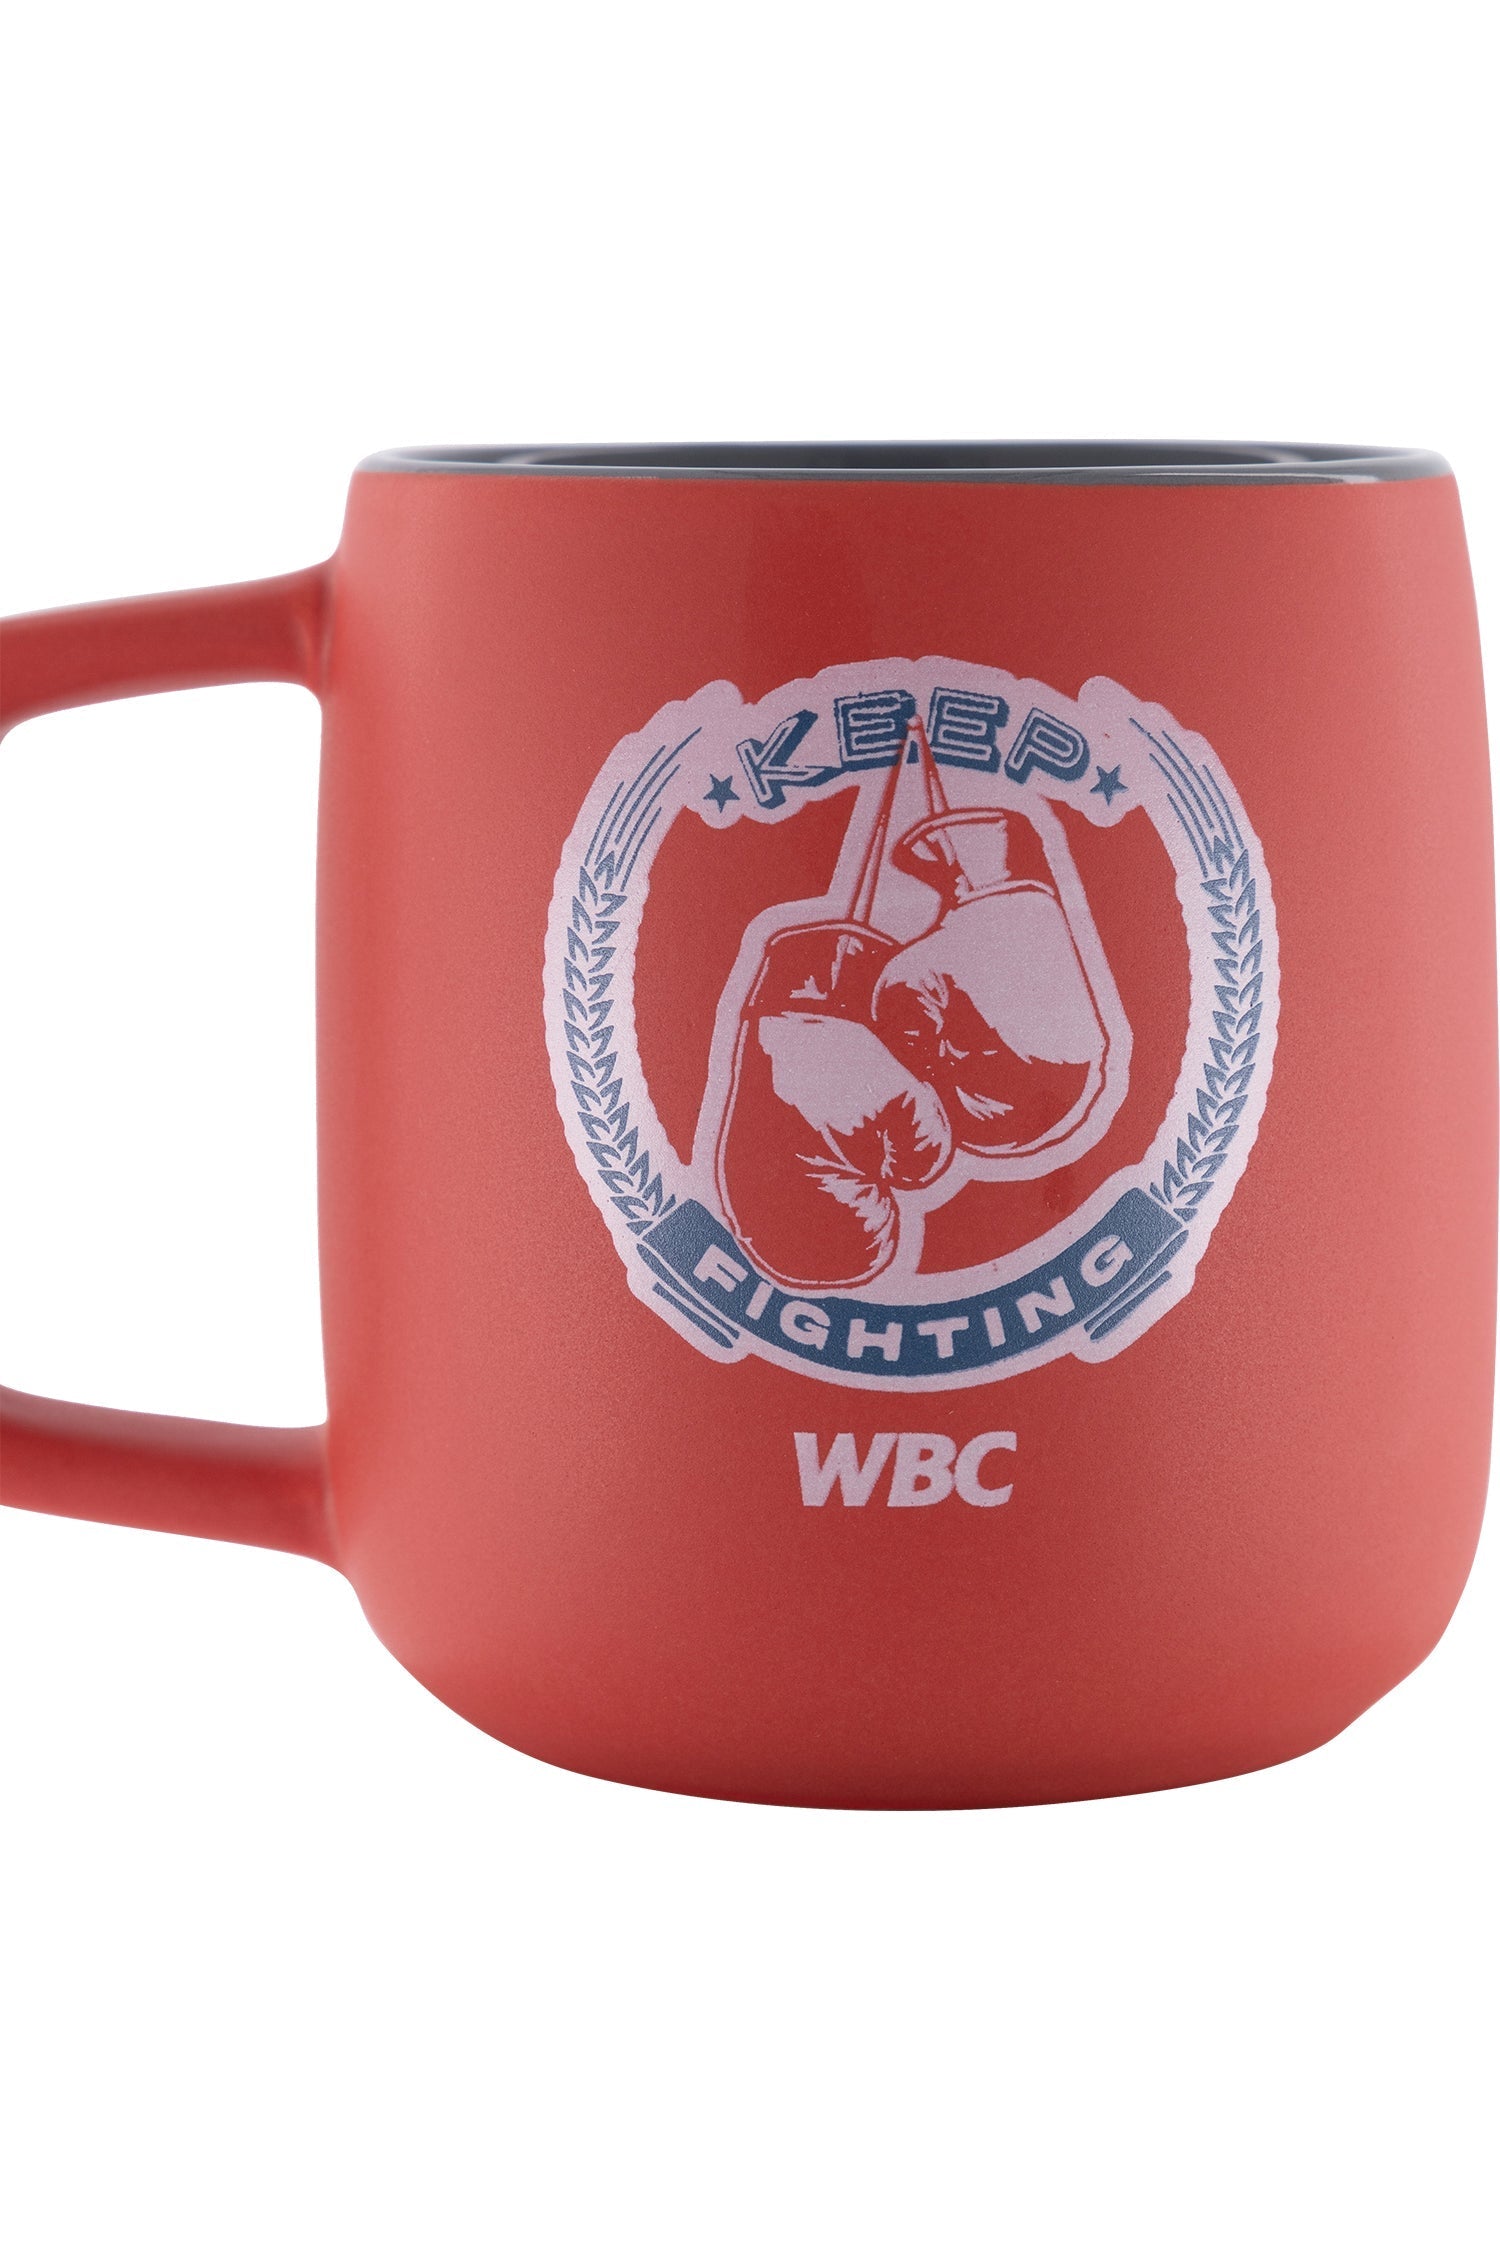 WBC Store WBC - Keep Fighting Coffee Mug